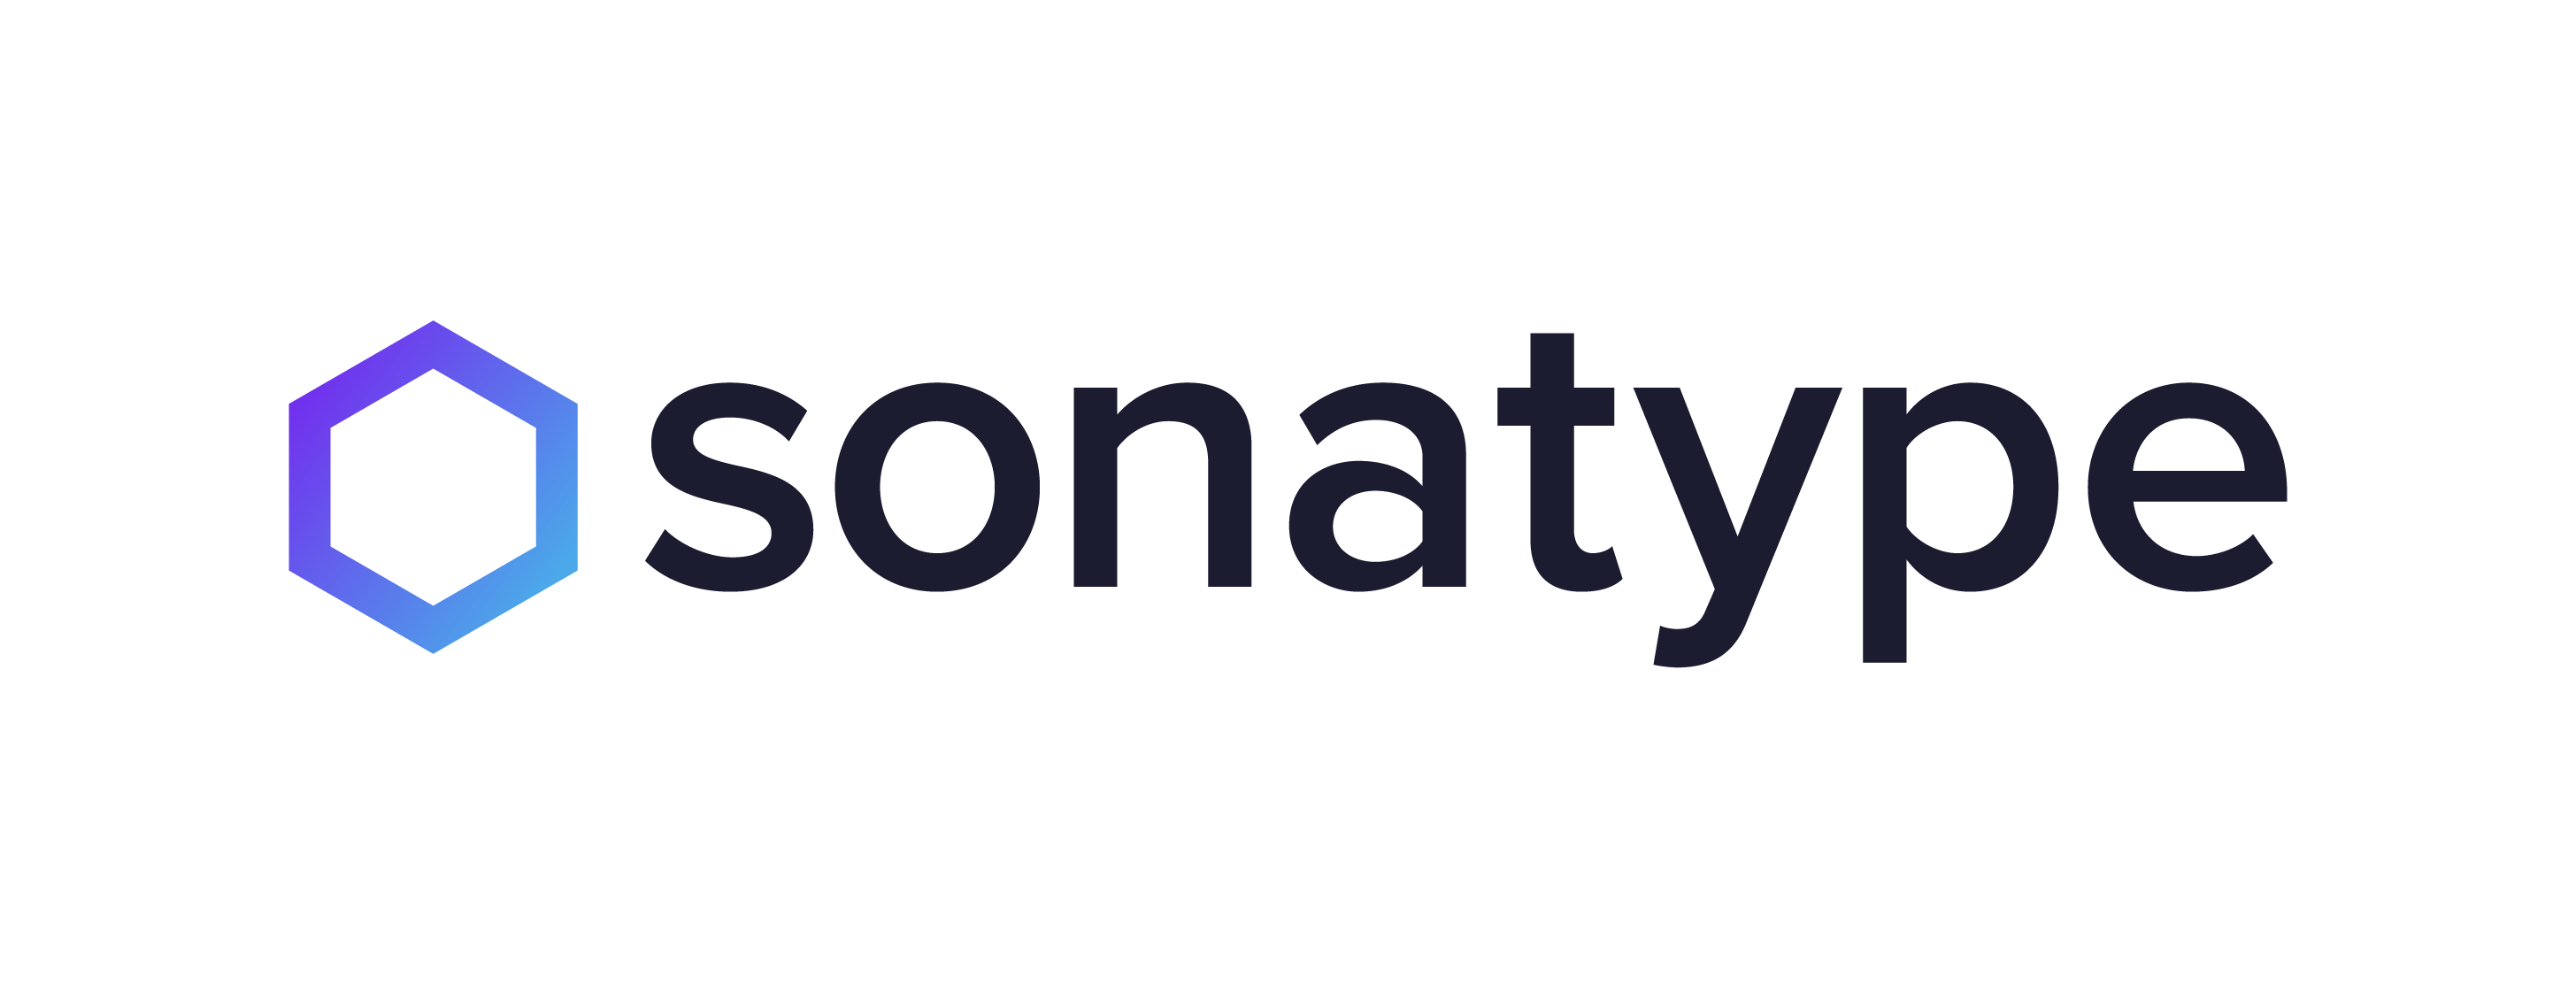 Sonatype Delivers Fi